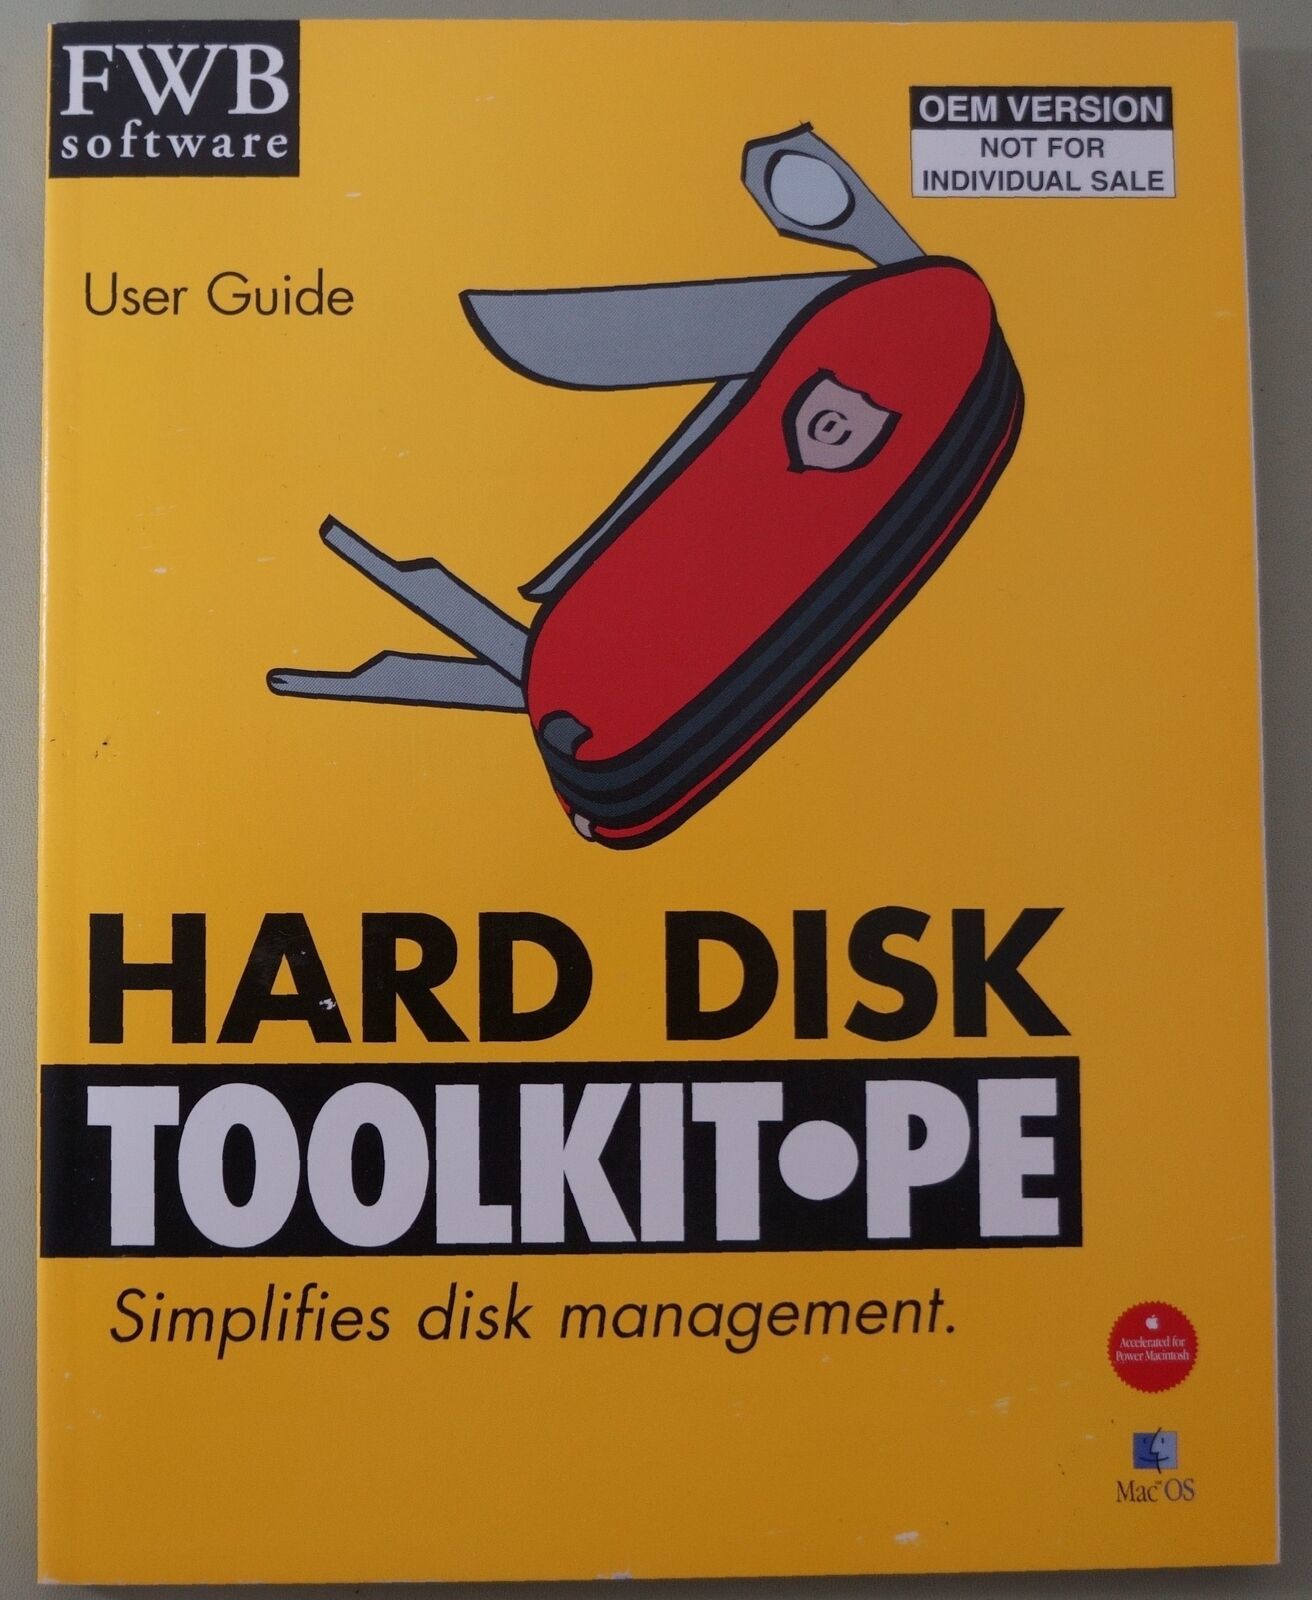 FWB Software - Hard Disk Toolkit PE for Mac OS - User Guide - $9.87